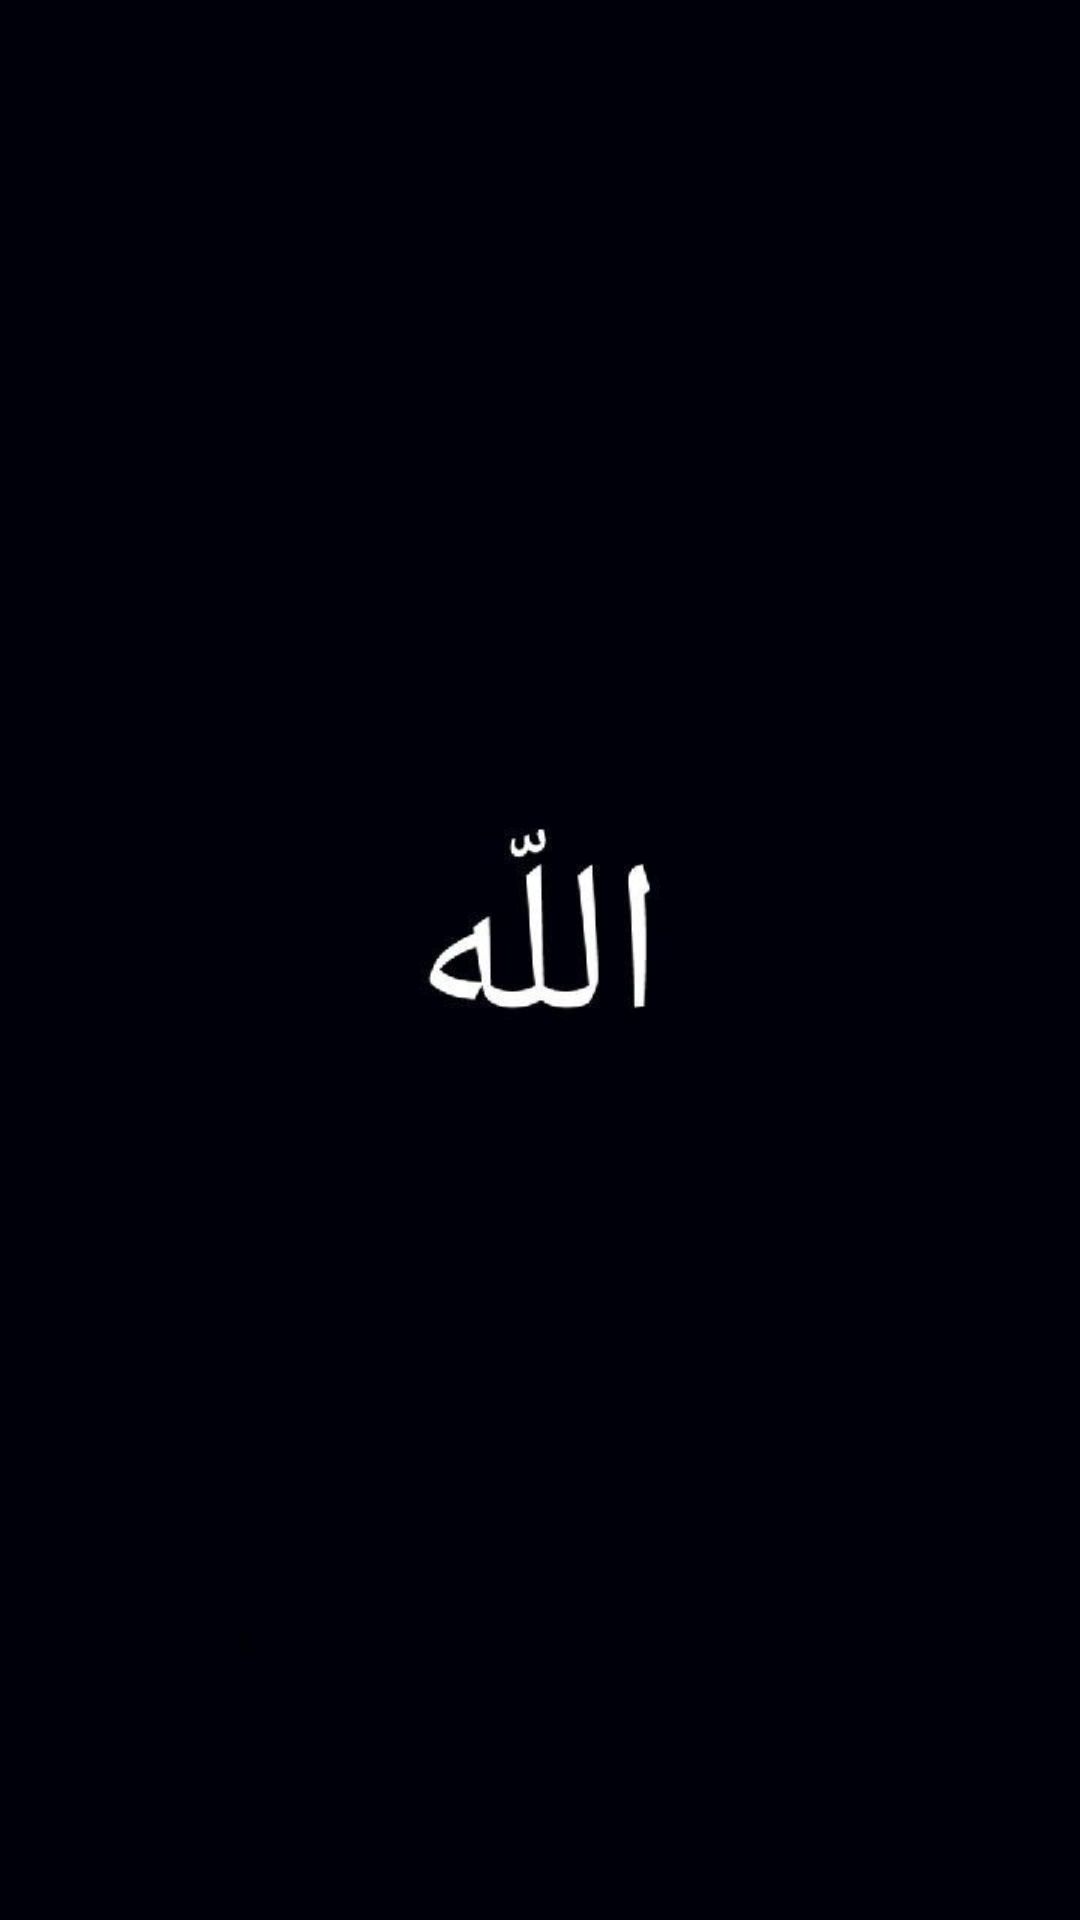 Allah Name Wallpapers